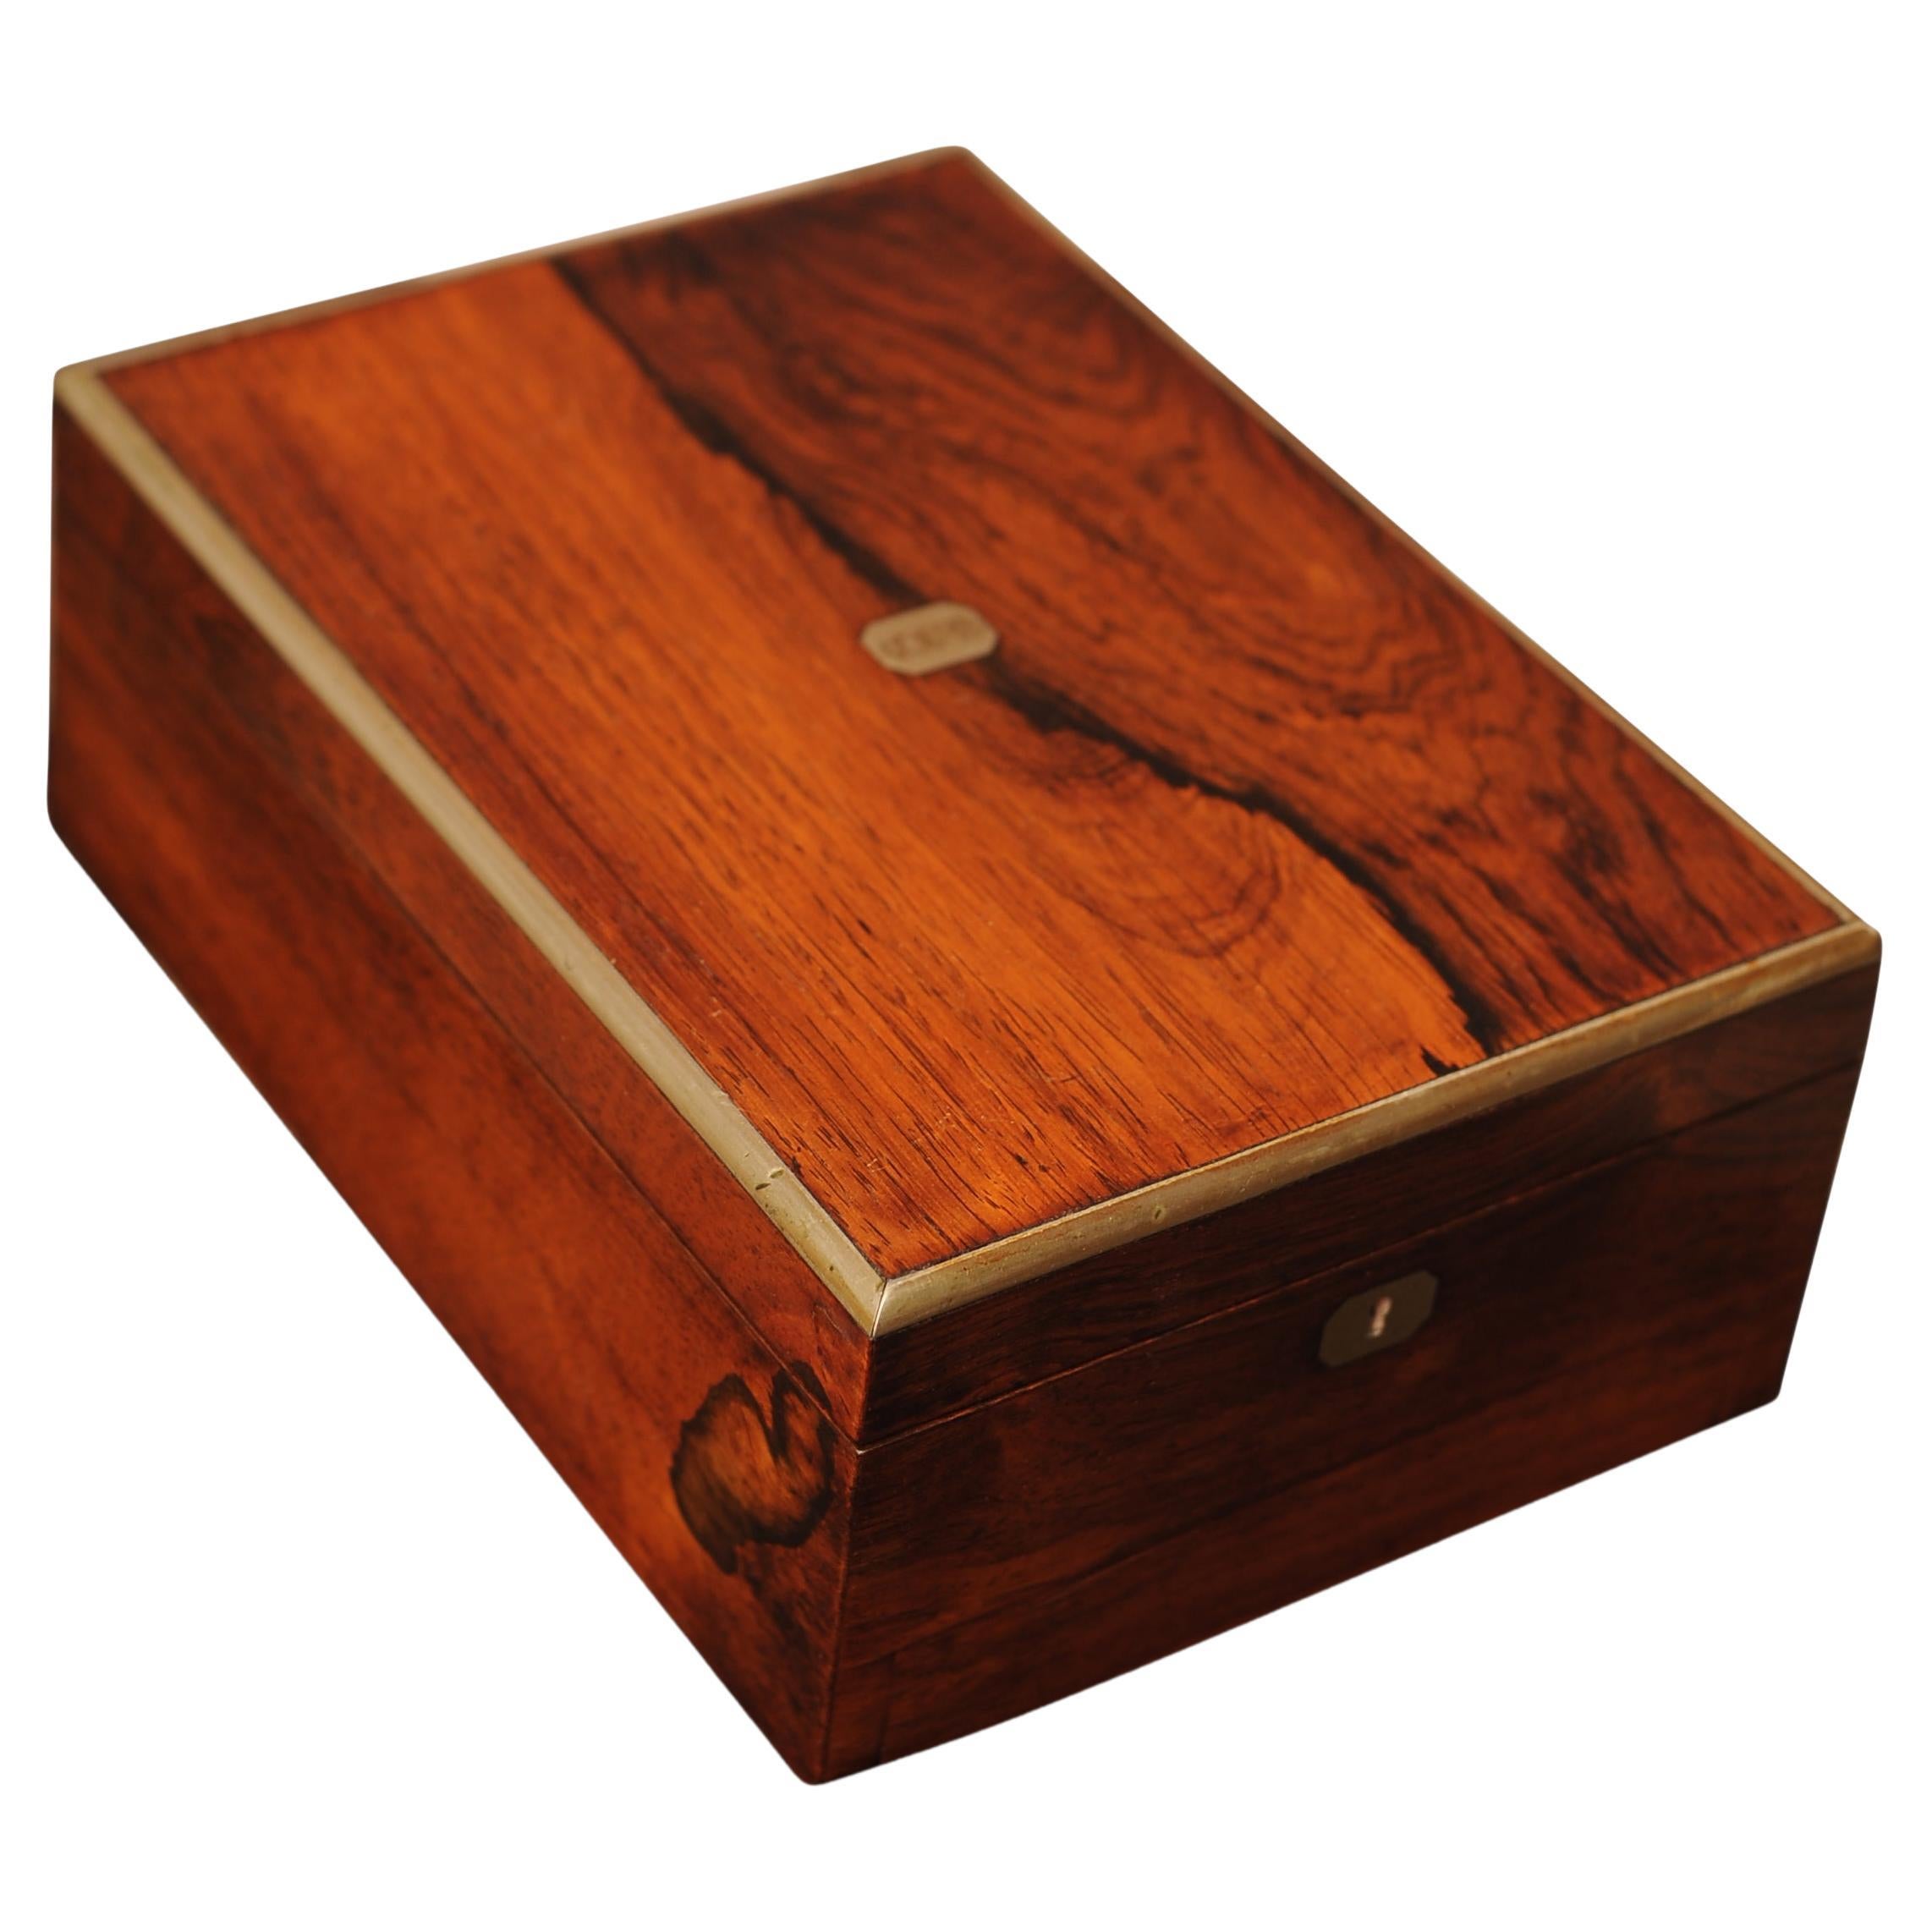 Domed Box of Red Wood Veneer With Velvet Lining